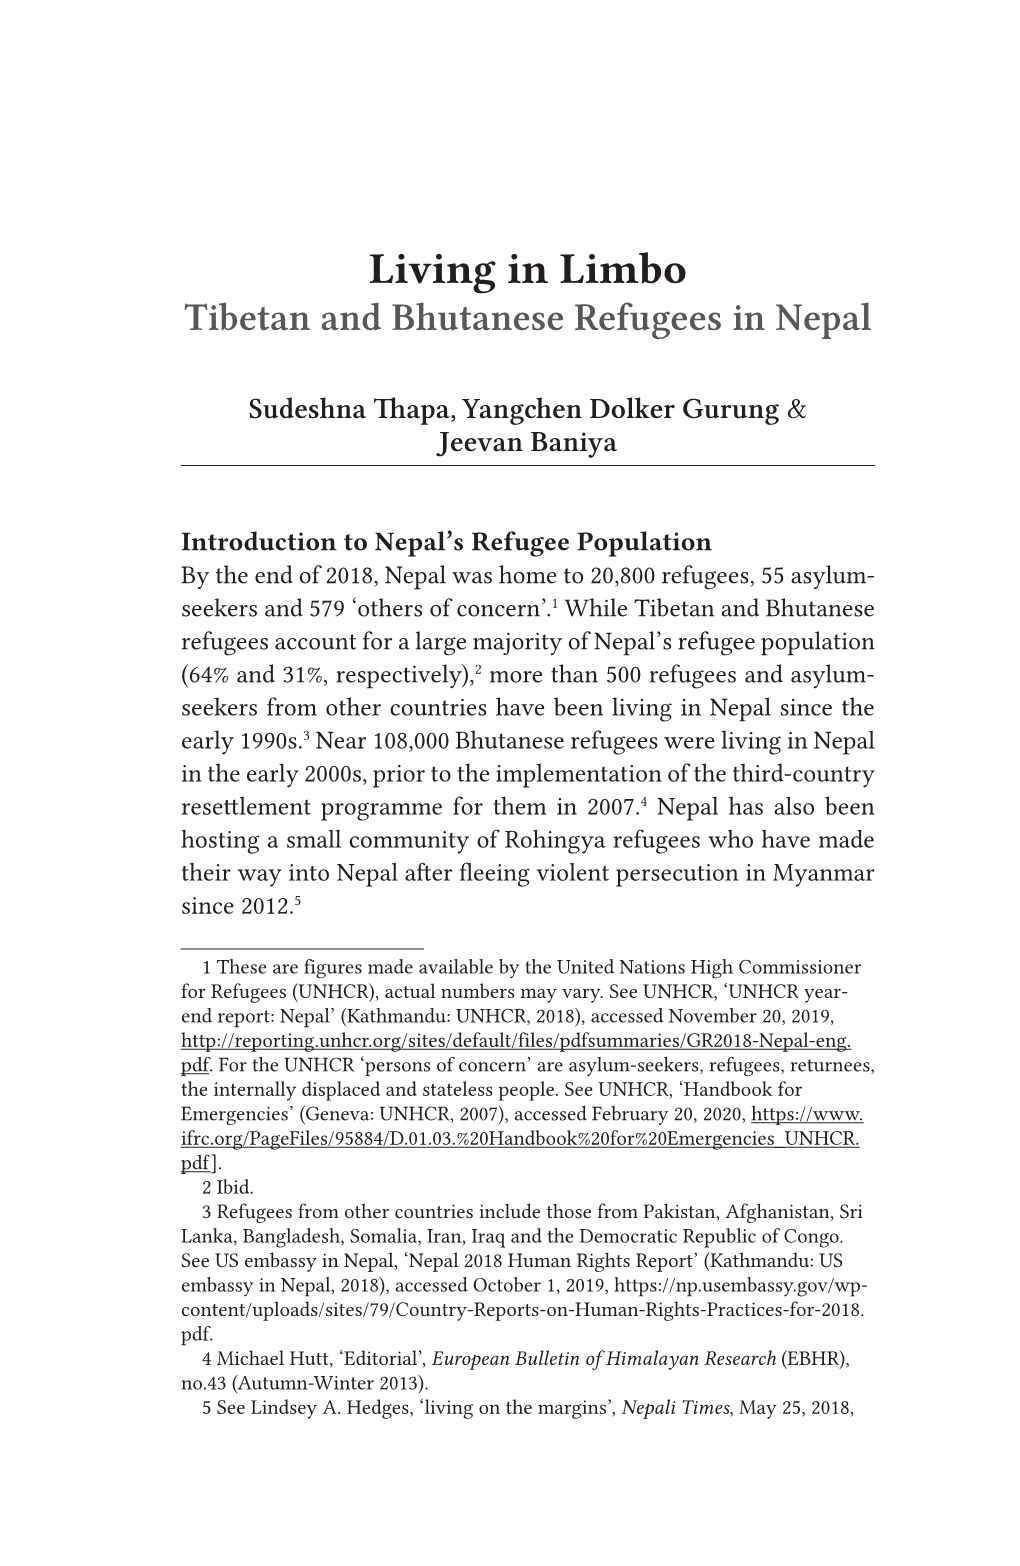 Living in Limbo: Tibetan and Bhutanese Refugees in Nepal